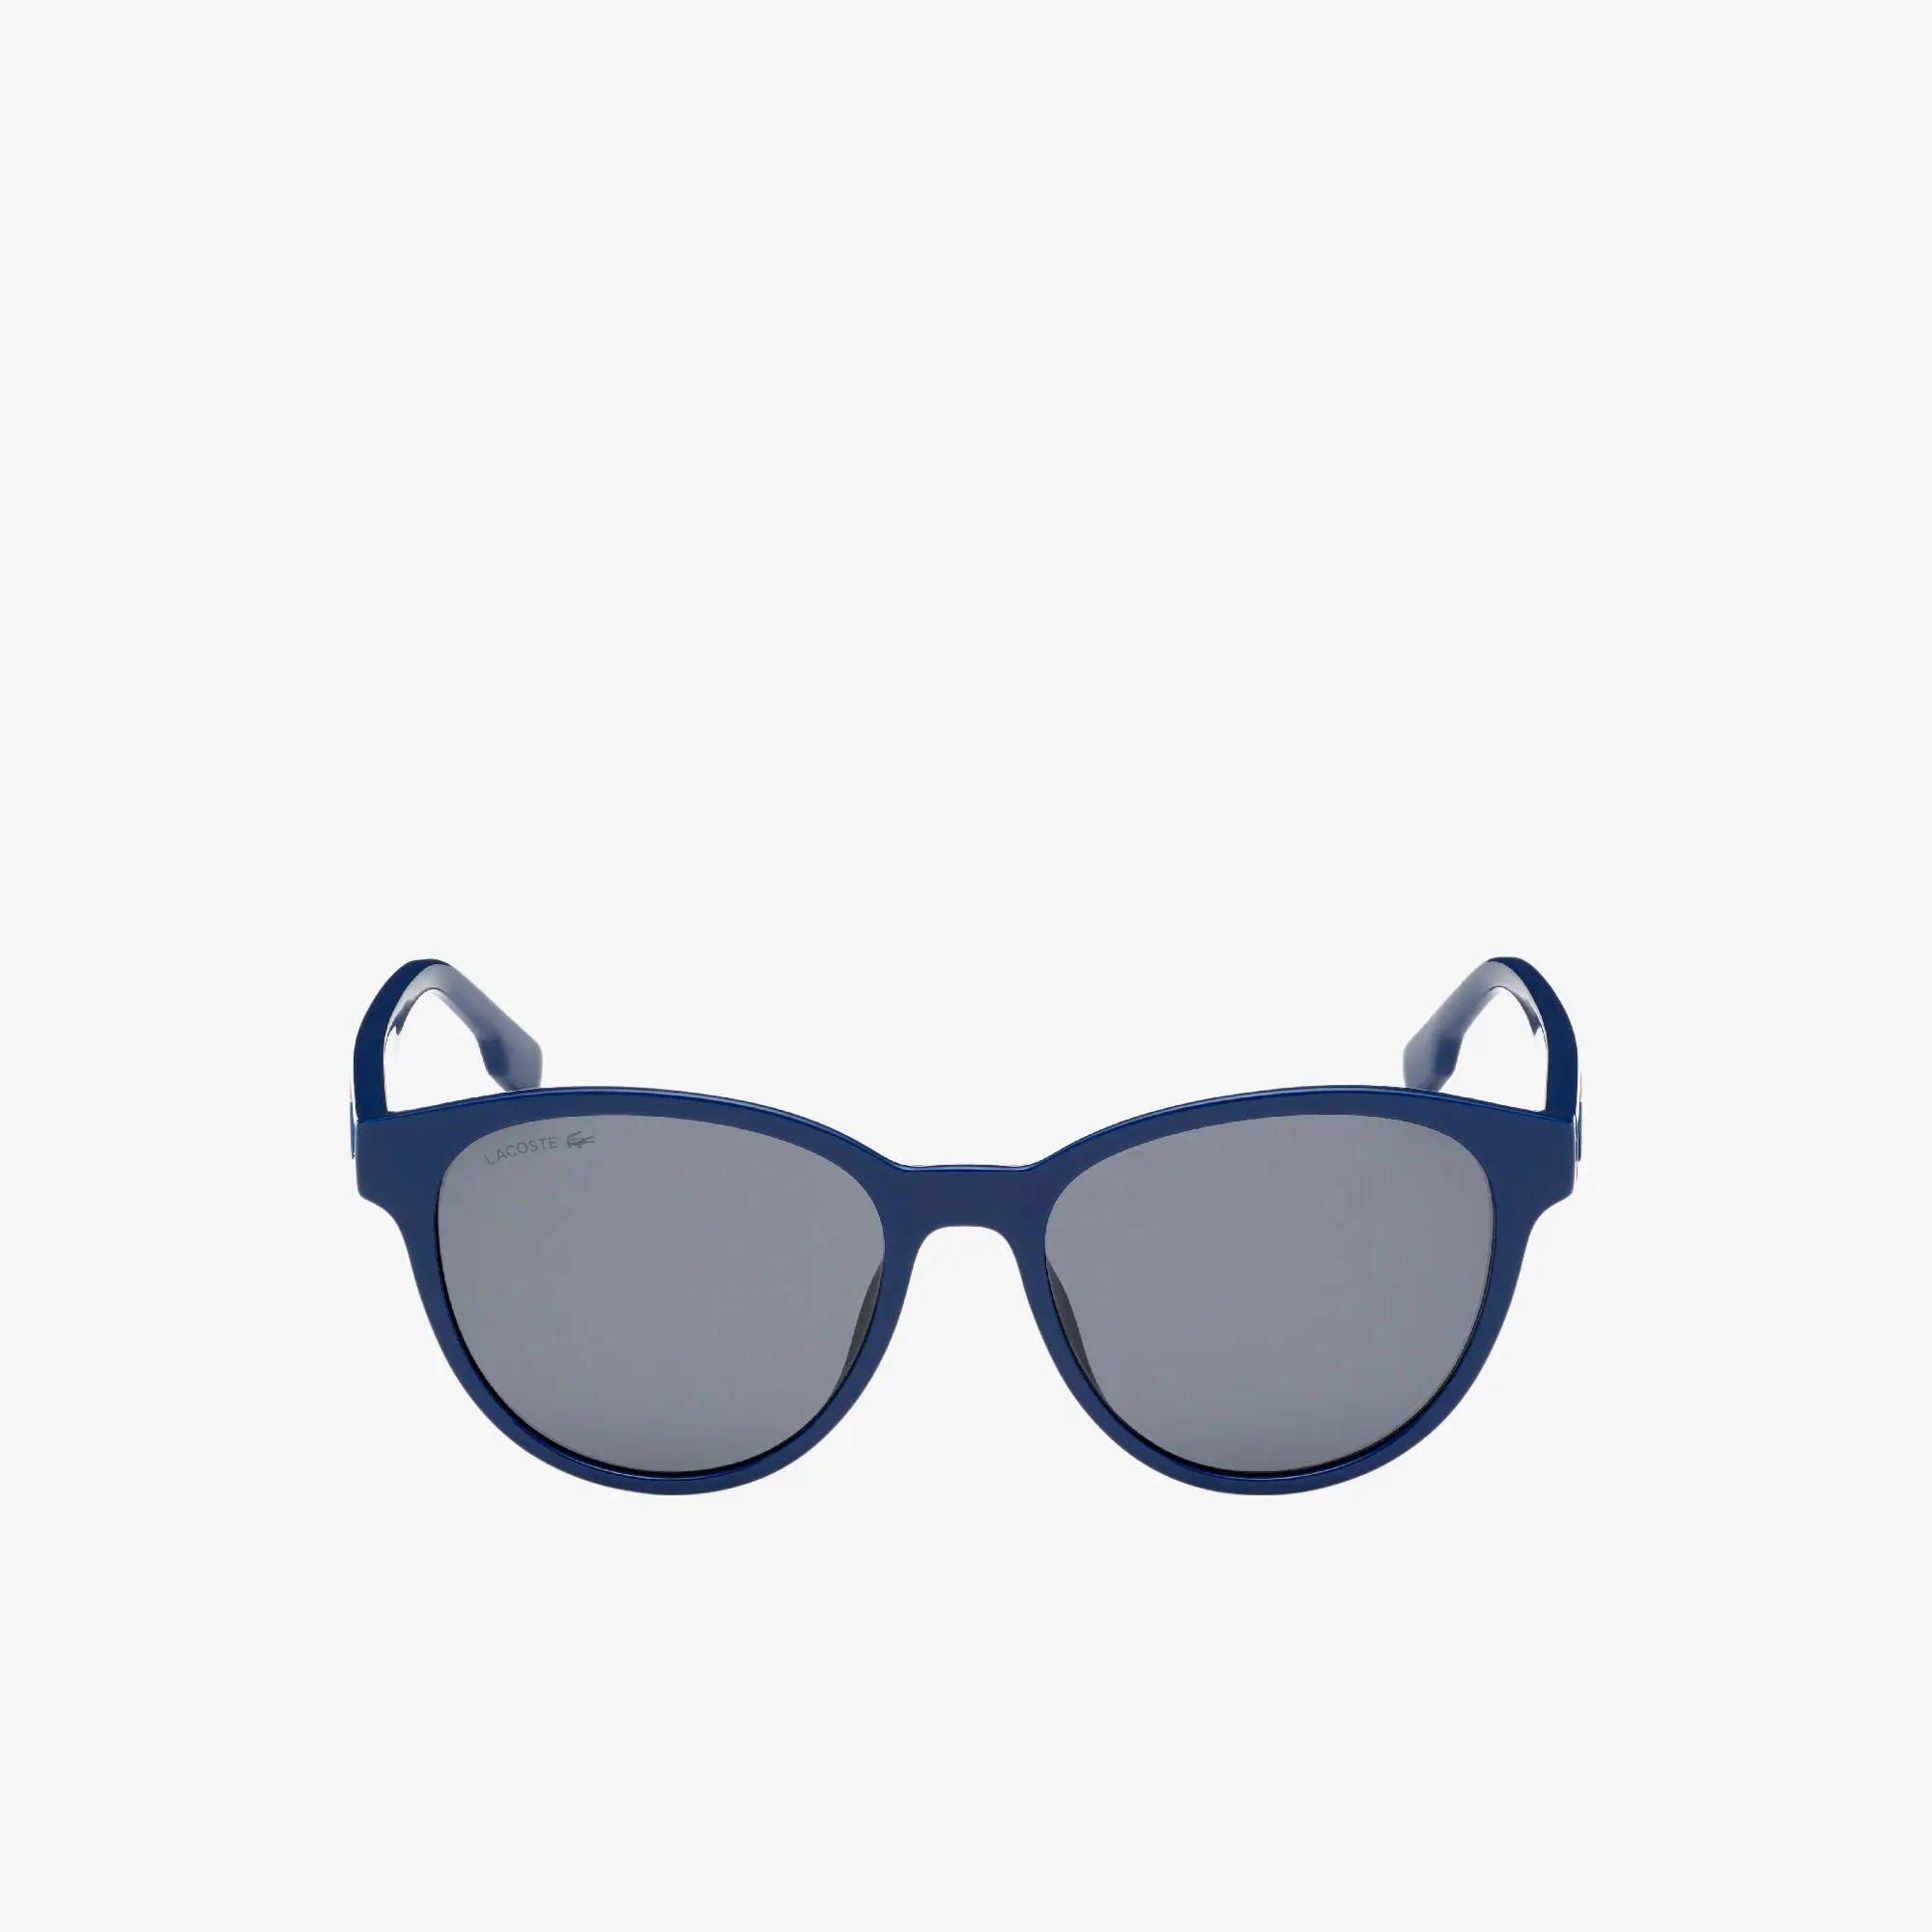 Lacoste Women's Round Roland Garros Sunglasses. 2